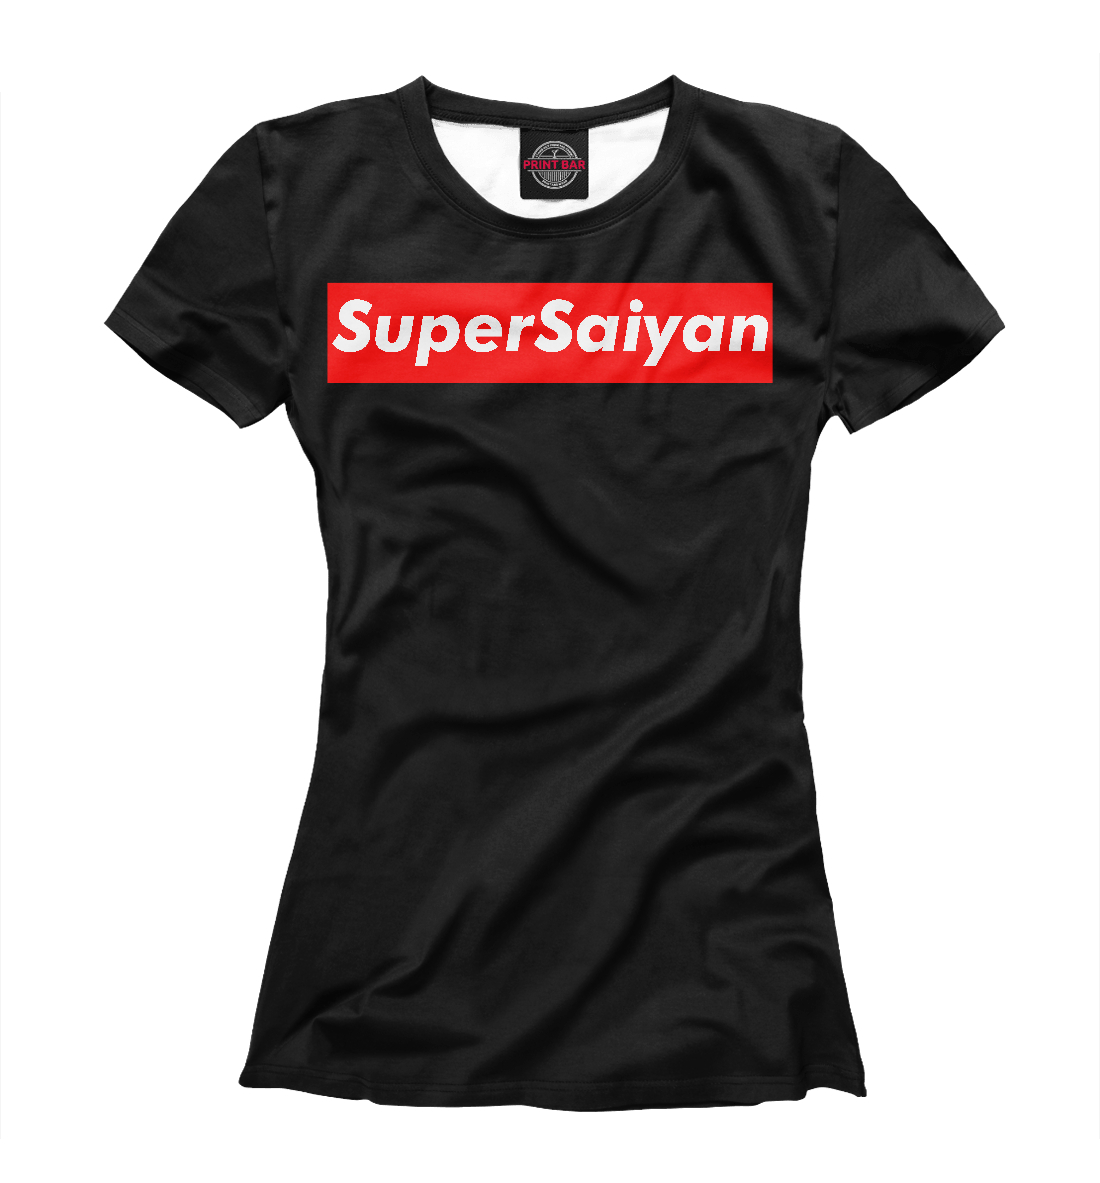 Футболка Super Saiyan для женщин, артикул: ANR-769279-fut-1mp